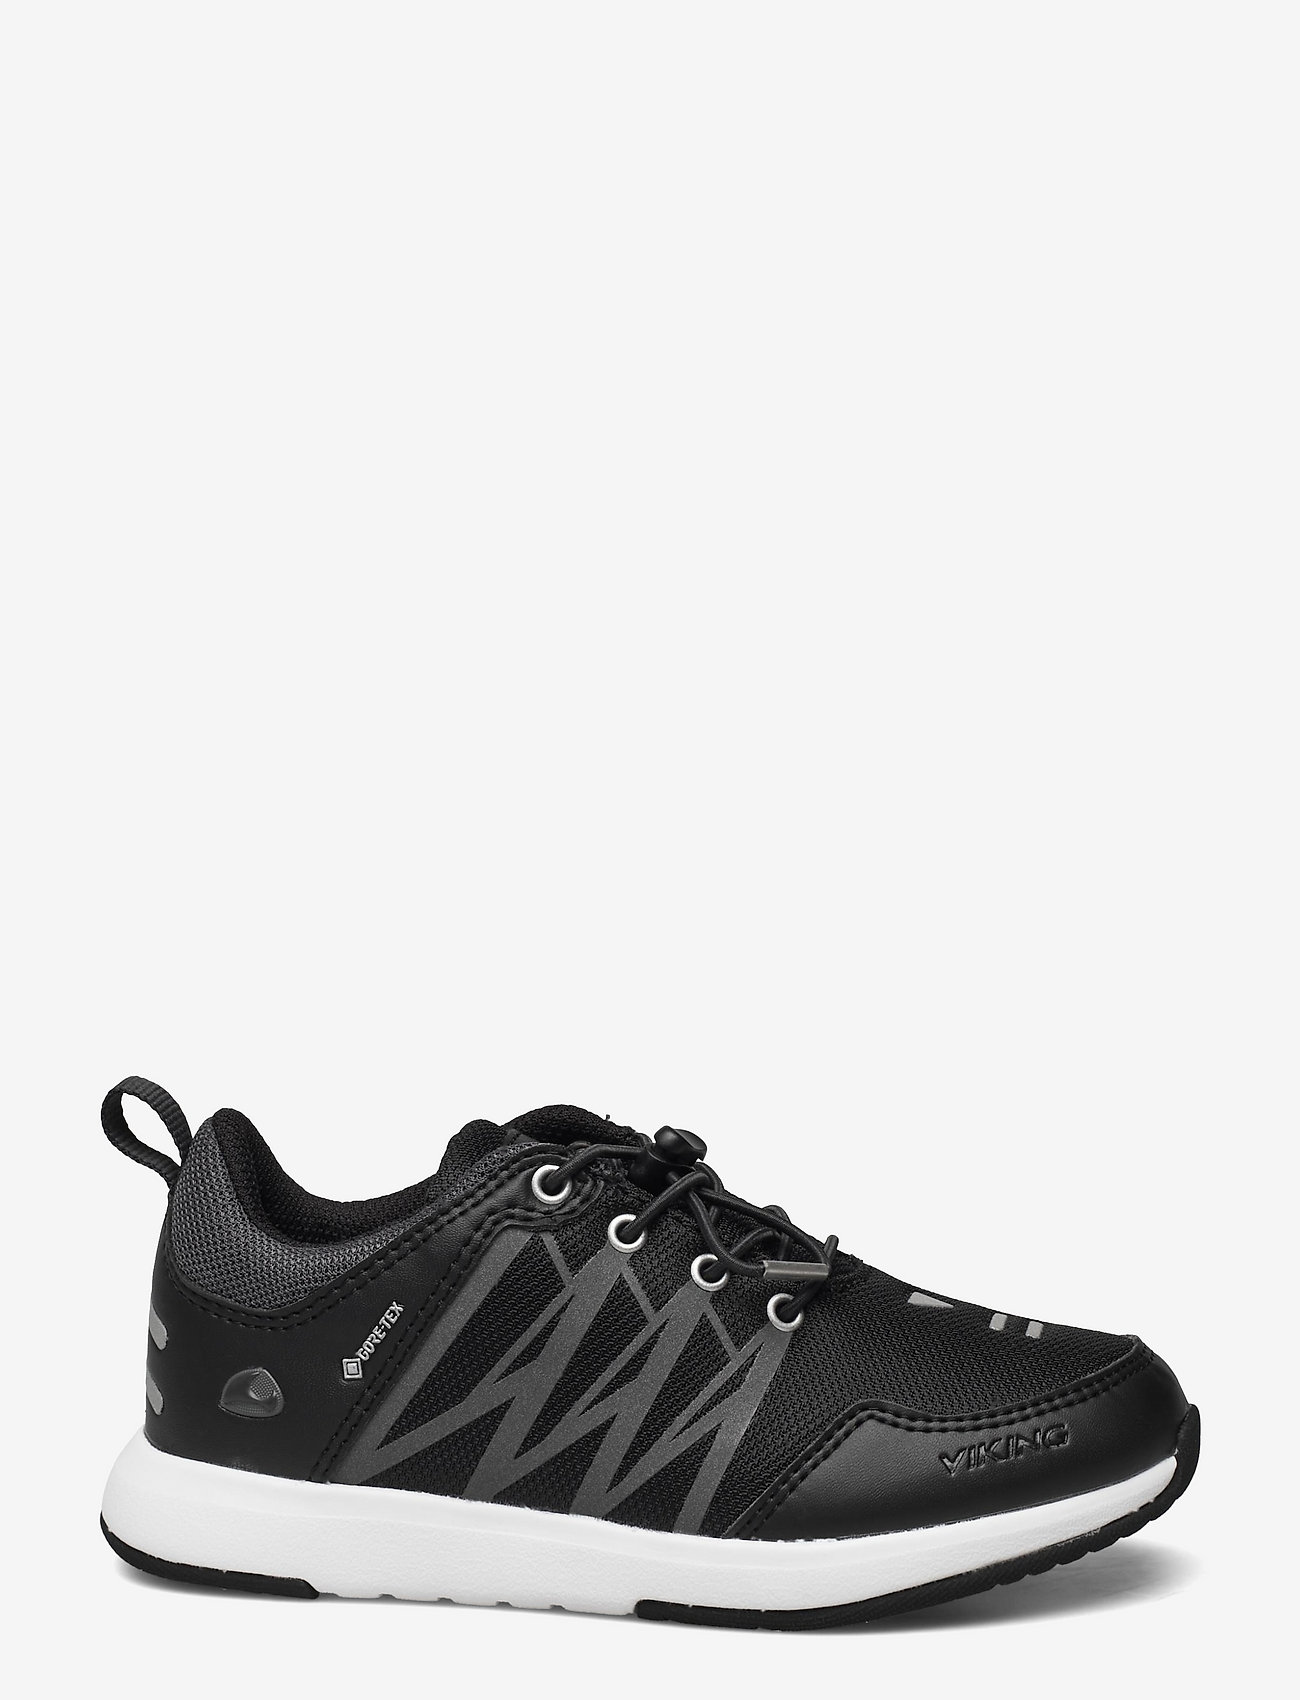 Viking - Oppsal Low GTX R - hiking shoes - black/charcoal - 1